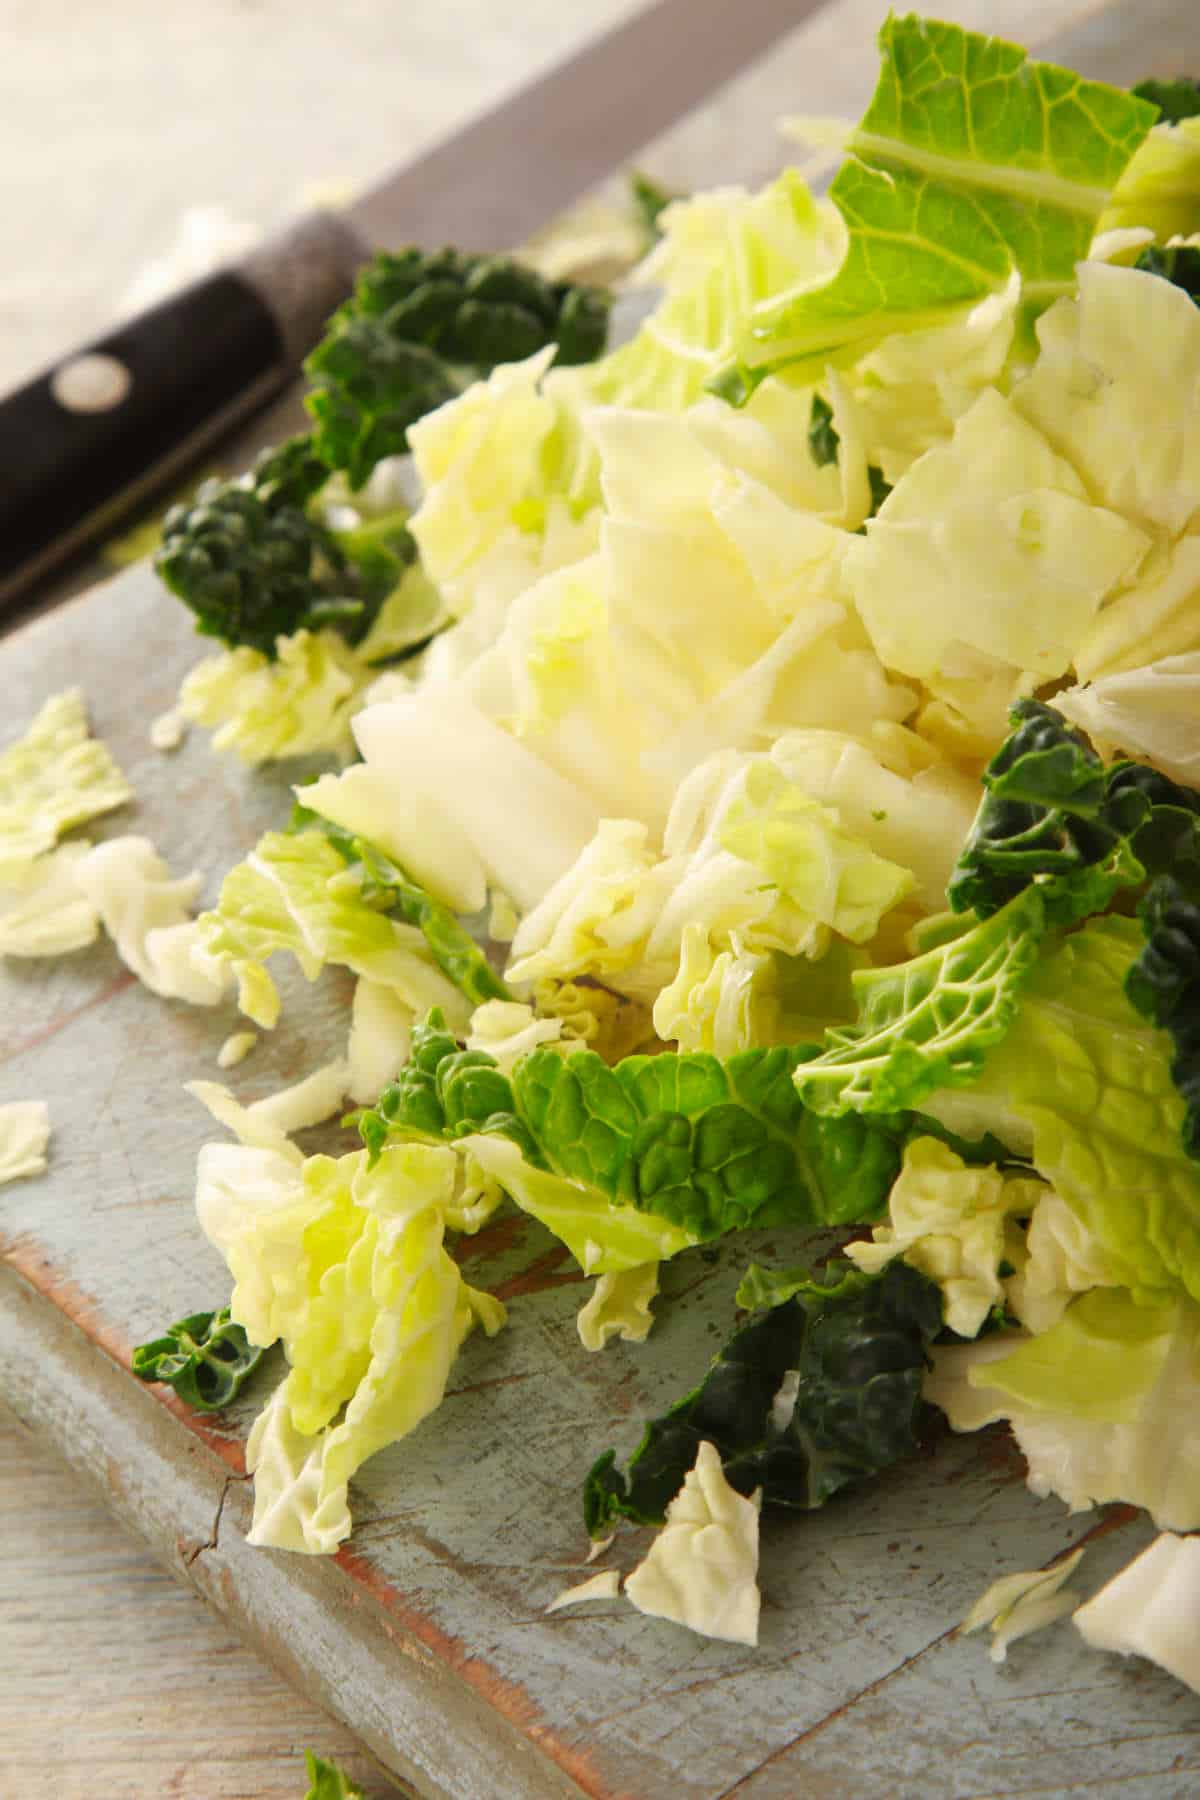 preparing chopped savoy cabbage and kale.